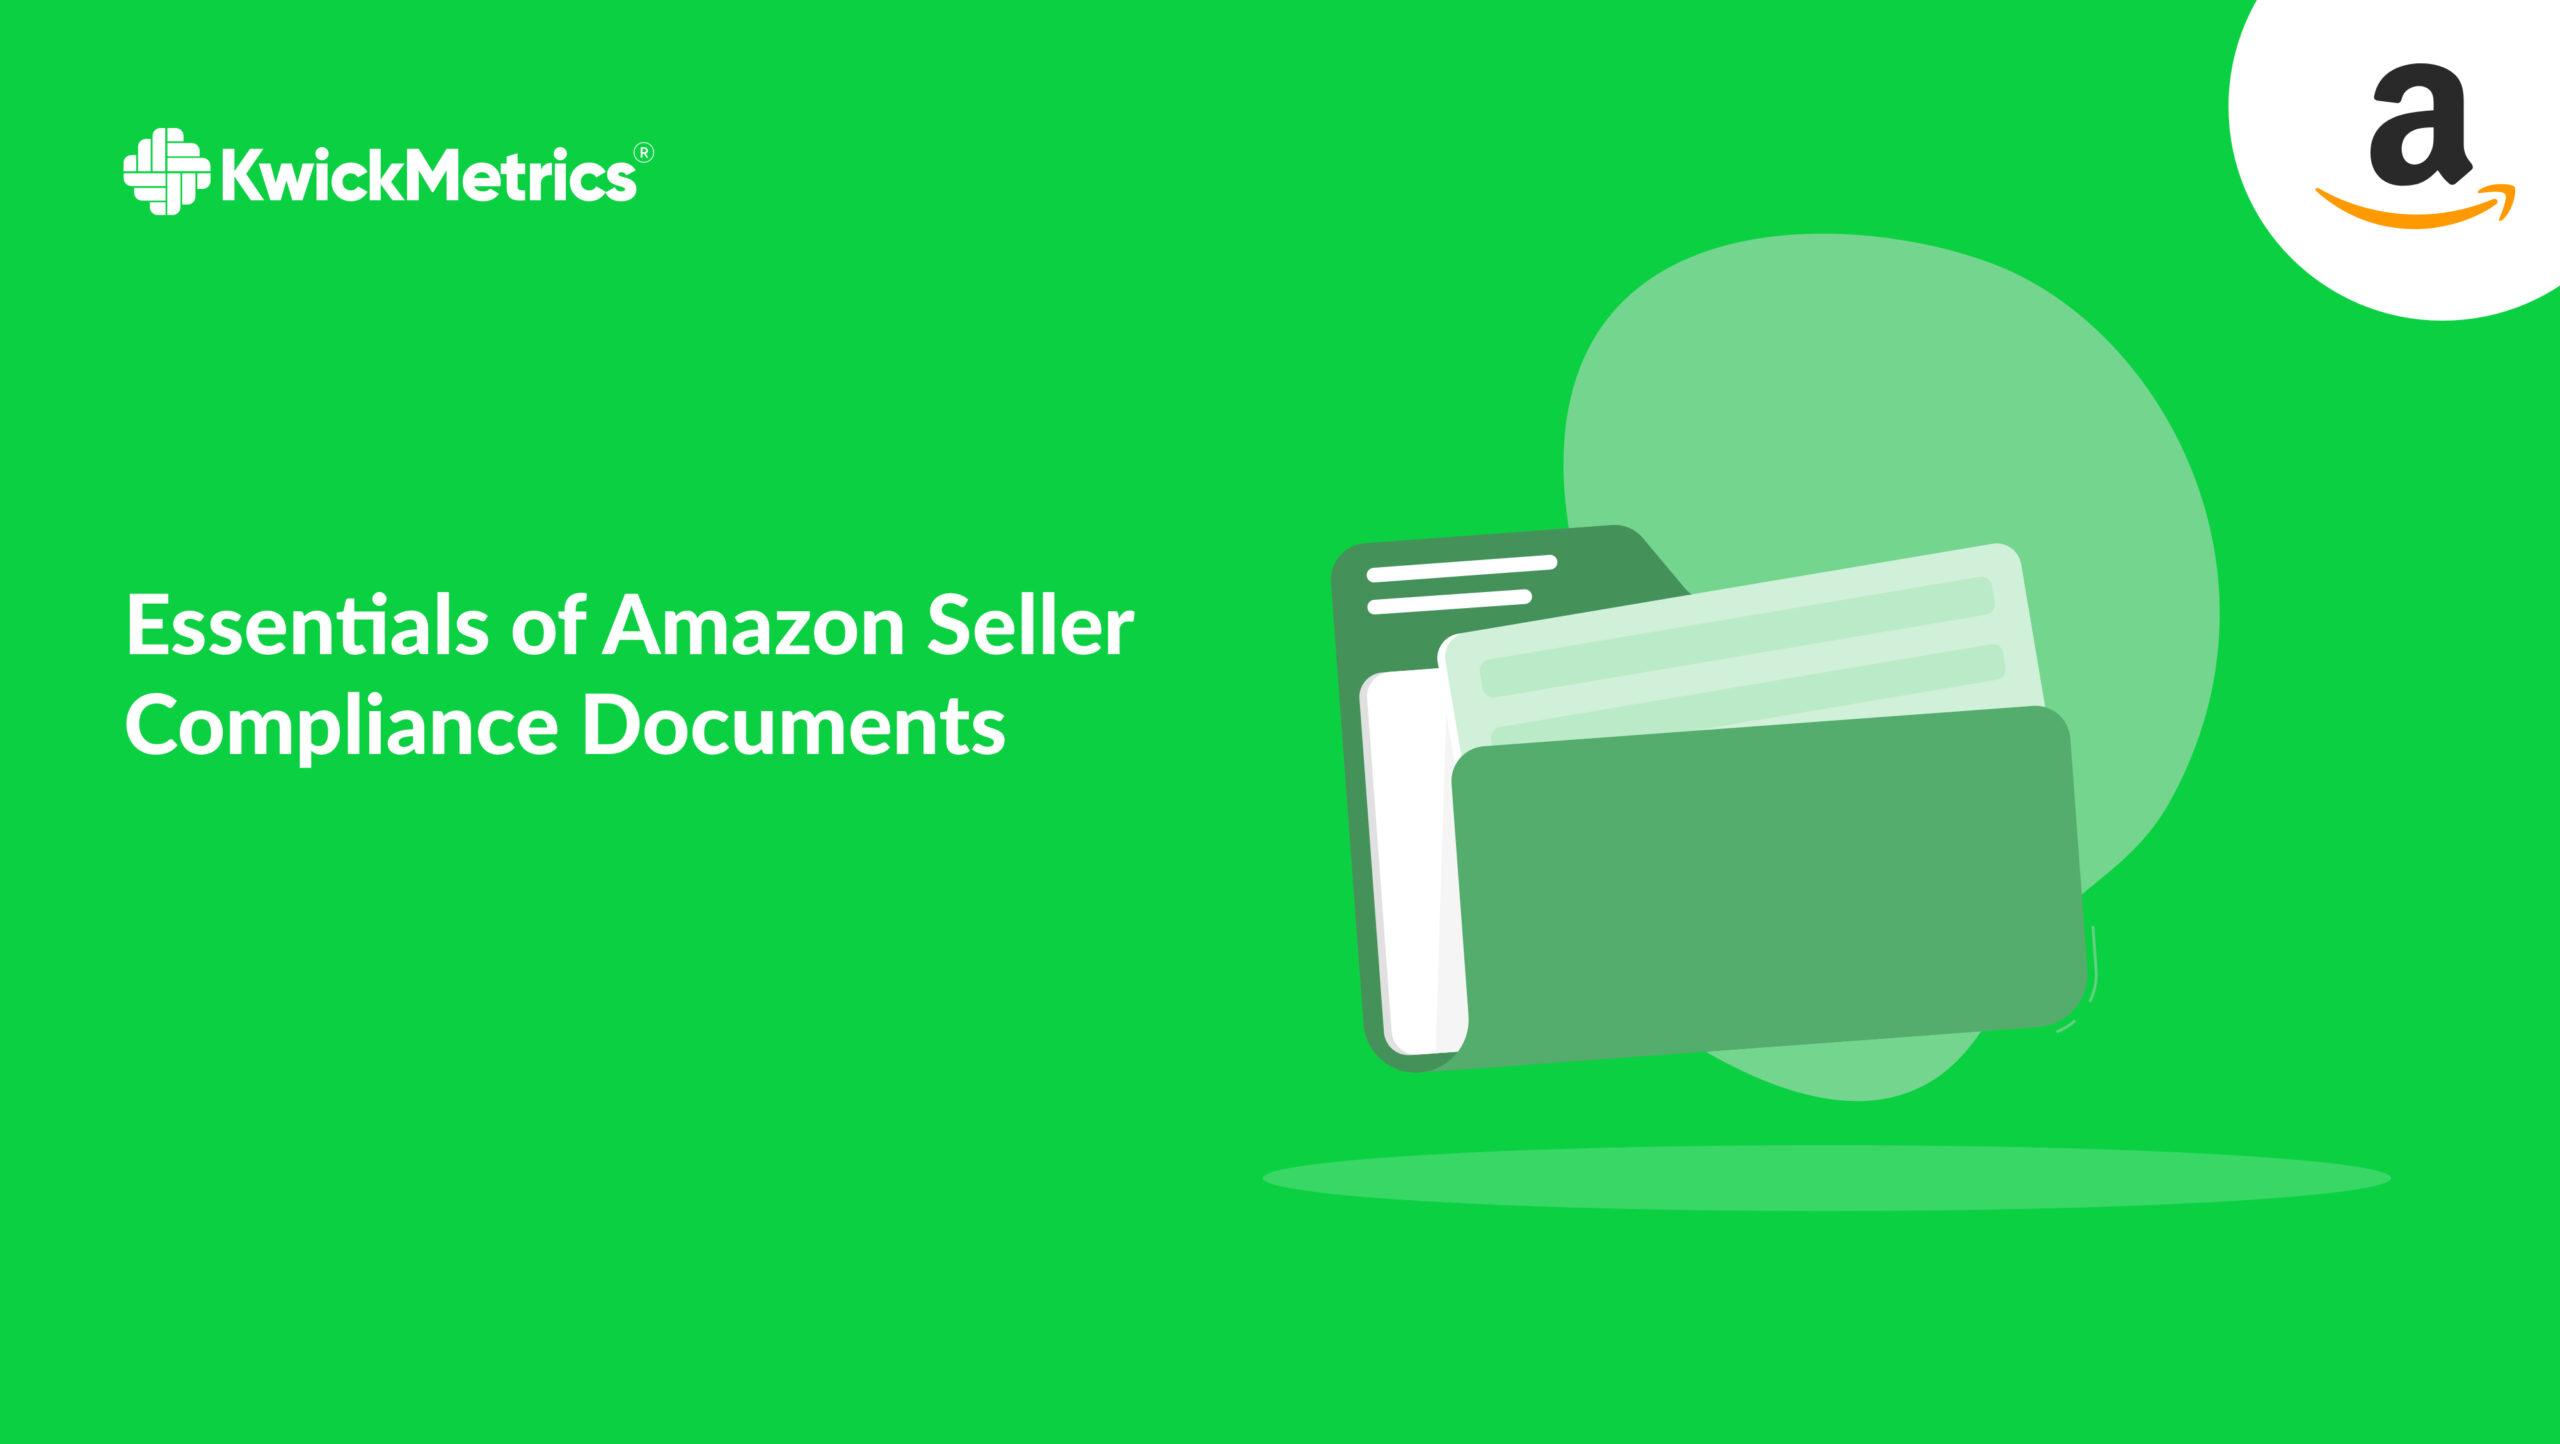 Essentials of Amazon Compliance Documents